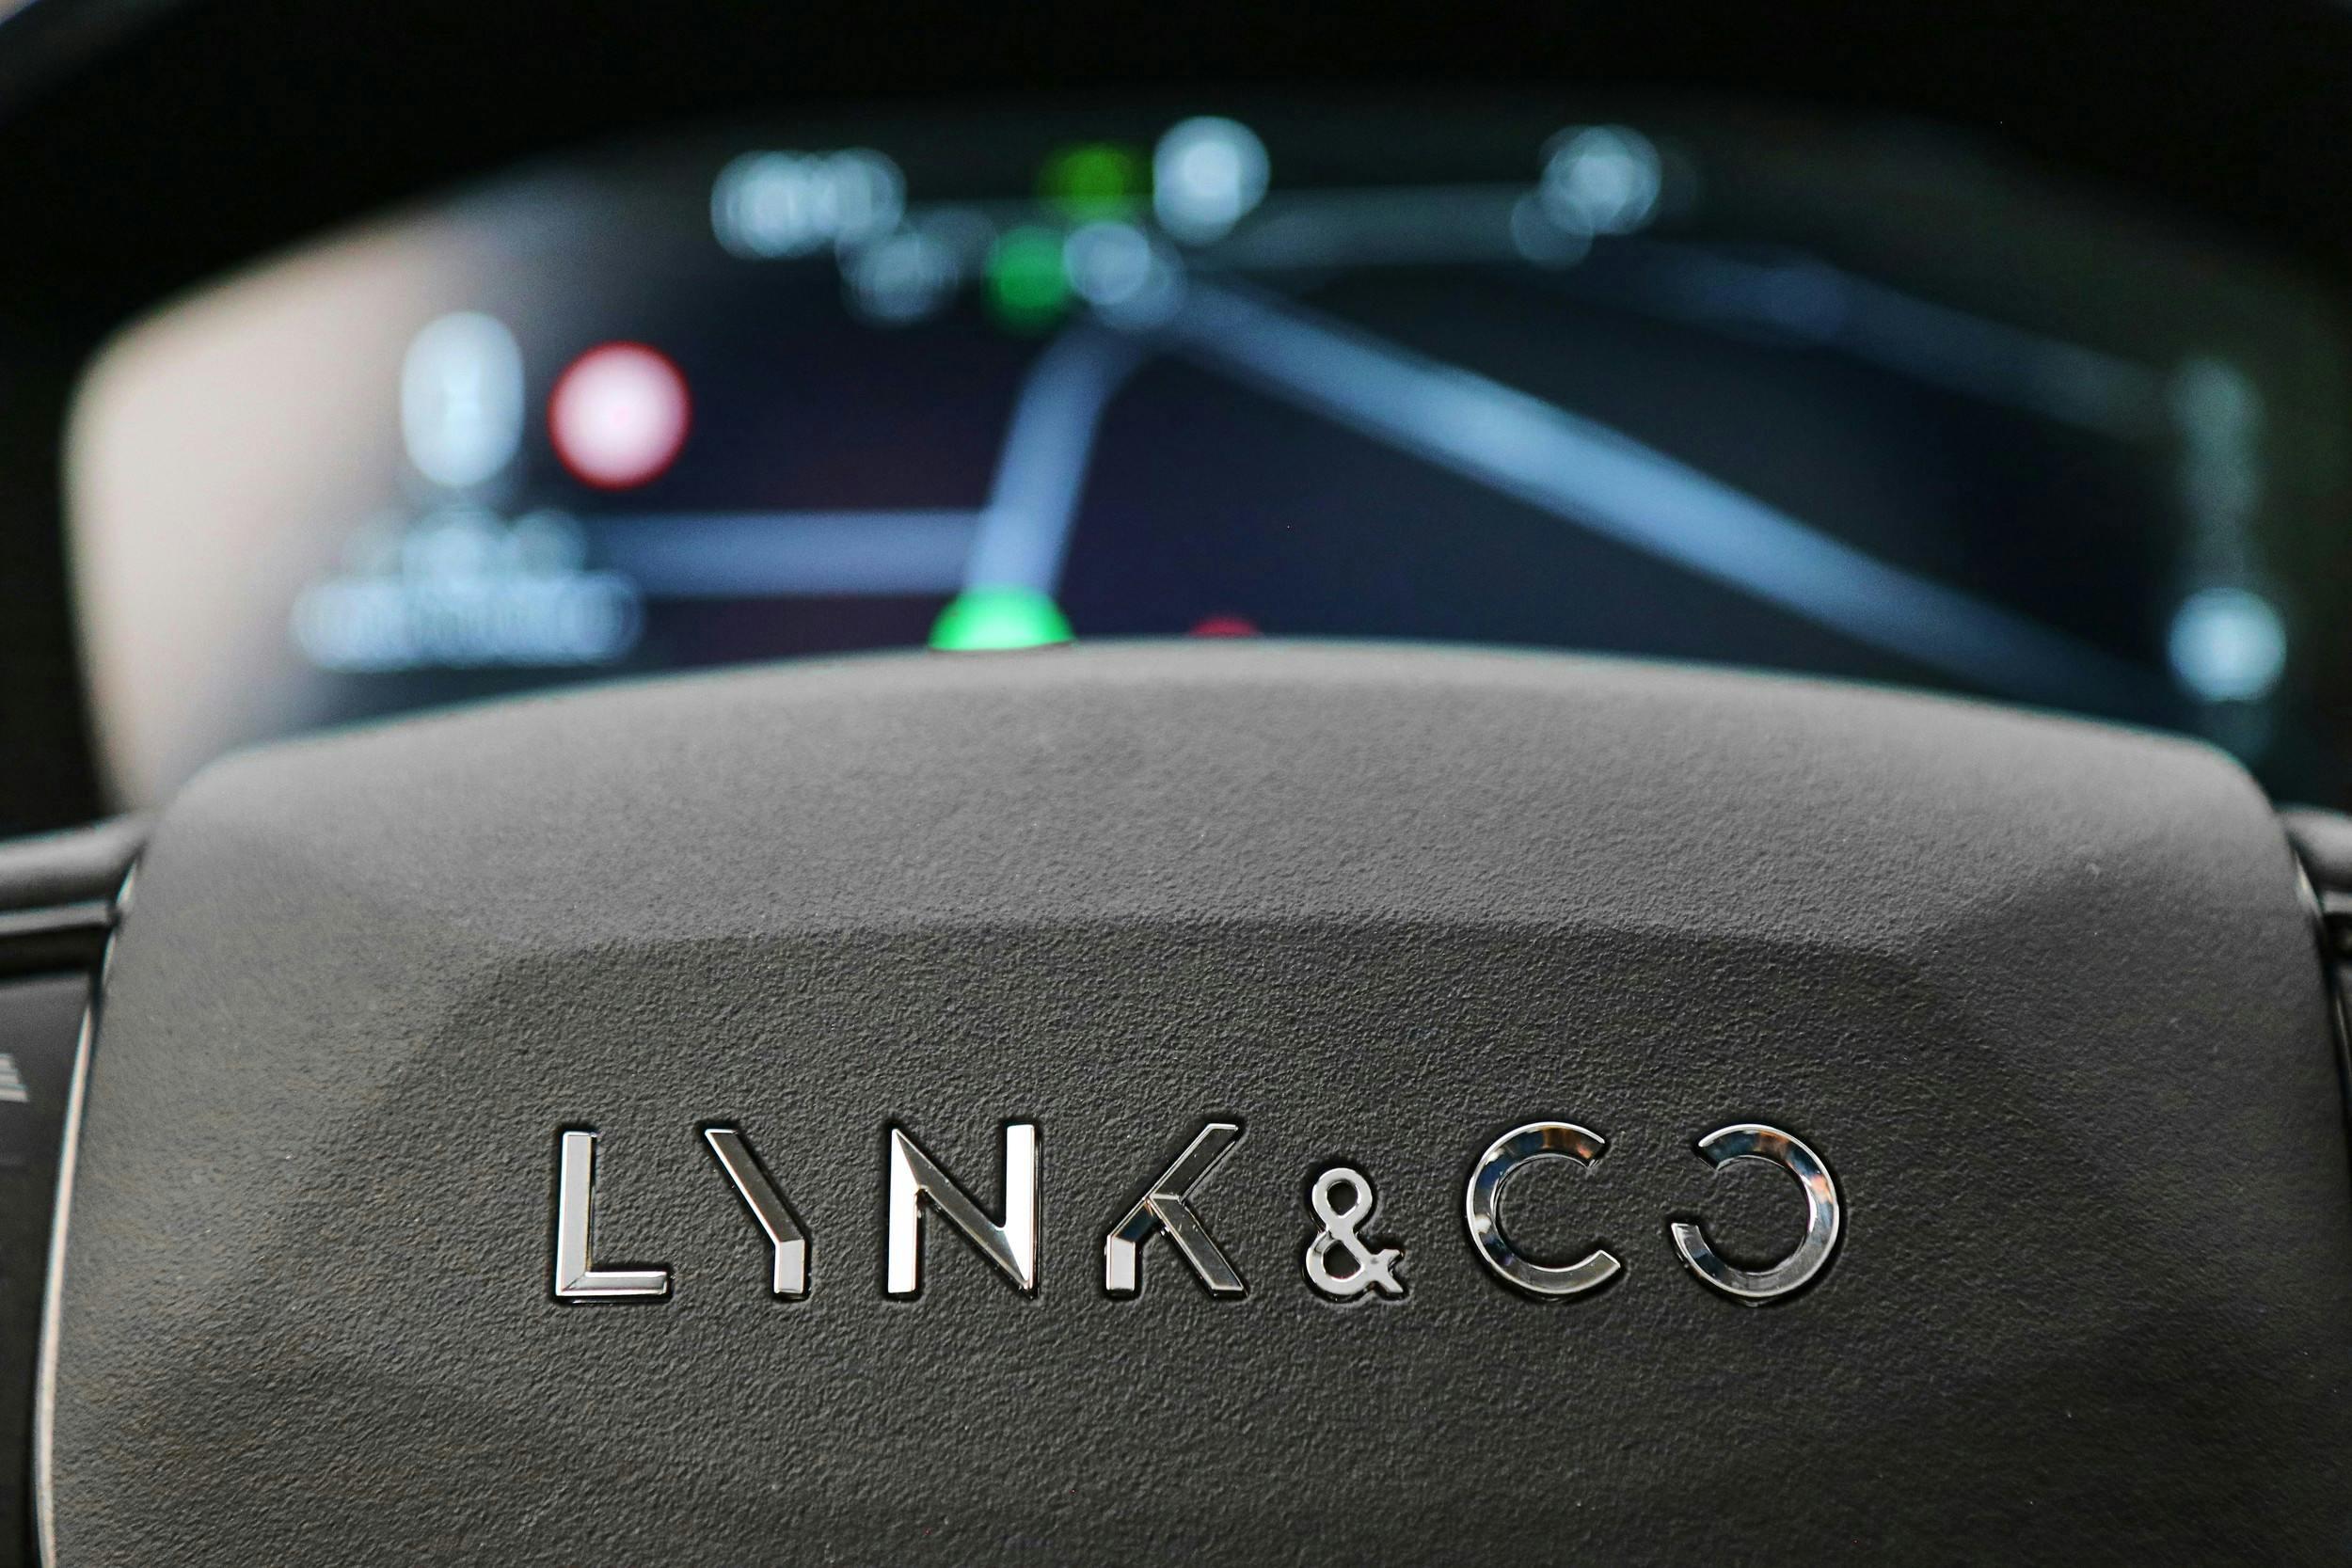 Lynk & Co 01